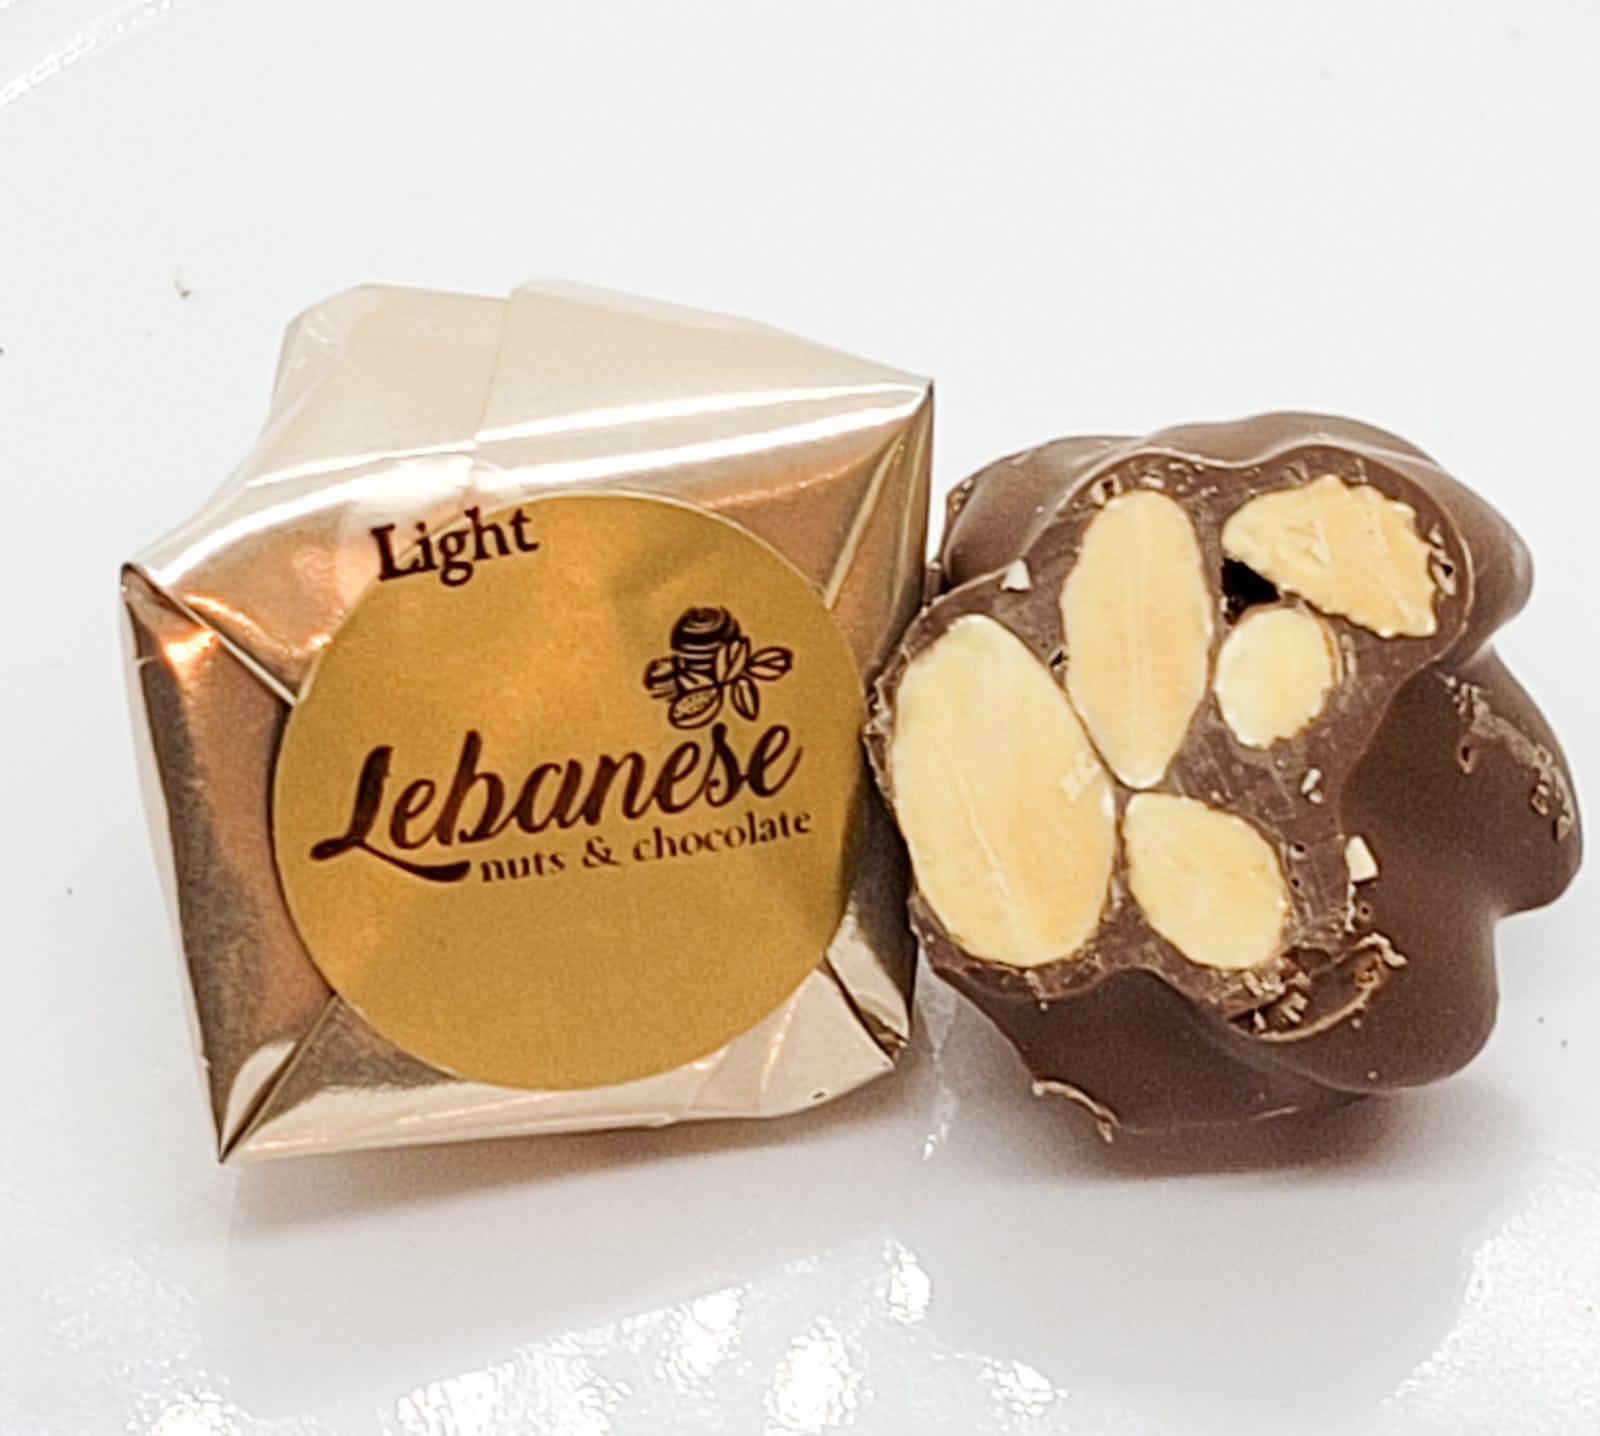 Chocolate Roche Almond (Light)